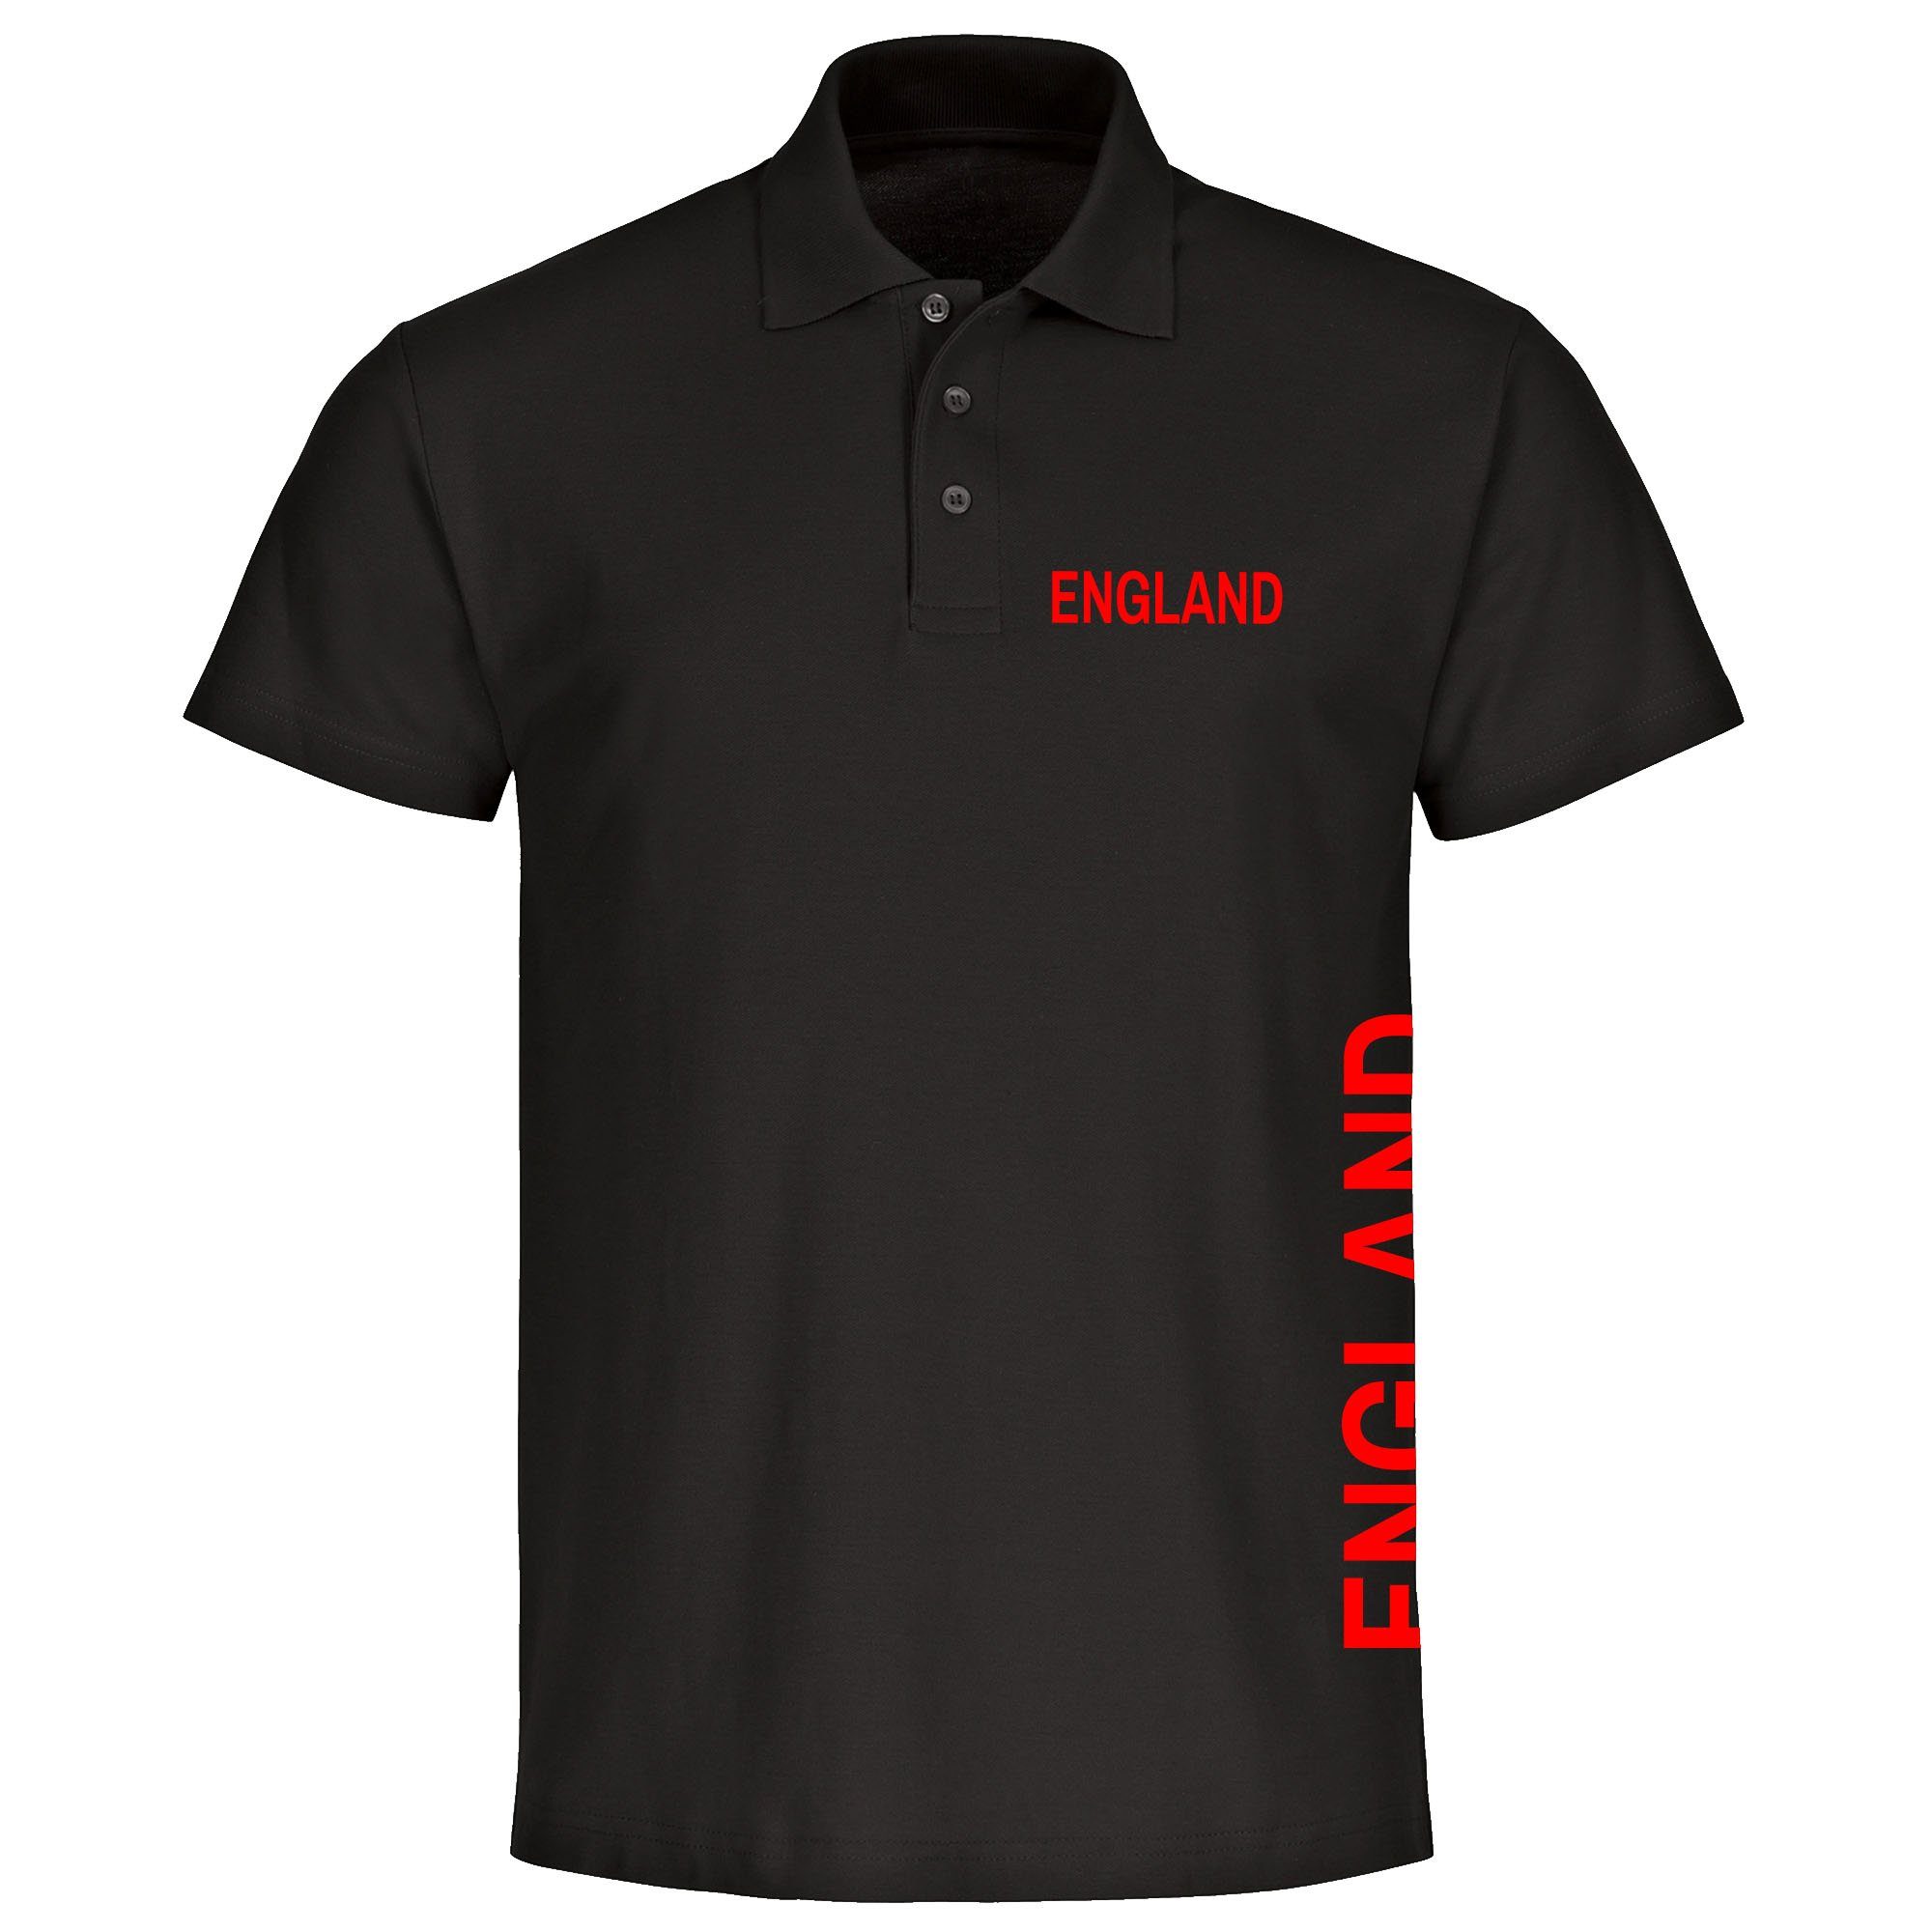 multifanshop Poloshirt England - Brust & Seite - Polo